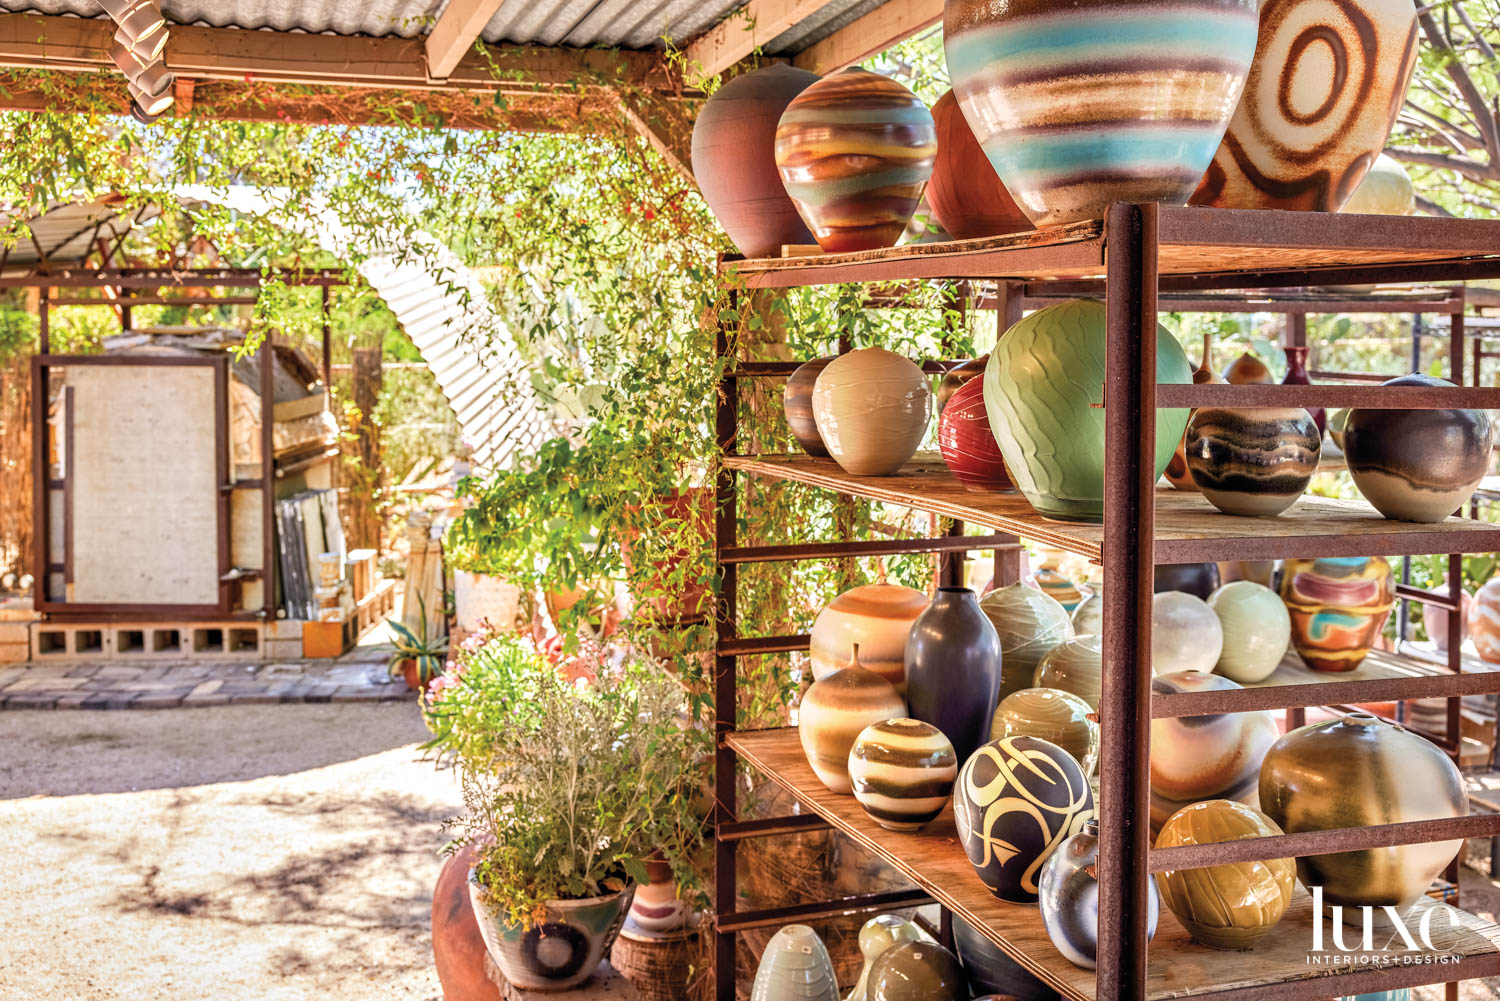 An outdoor ceramics studio with shelves holding pots.